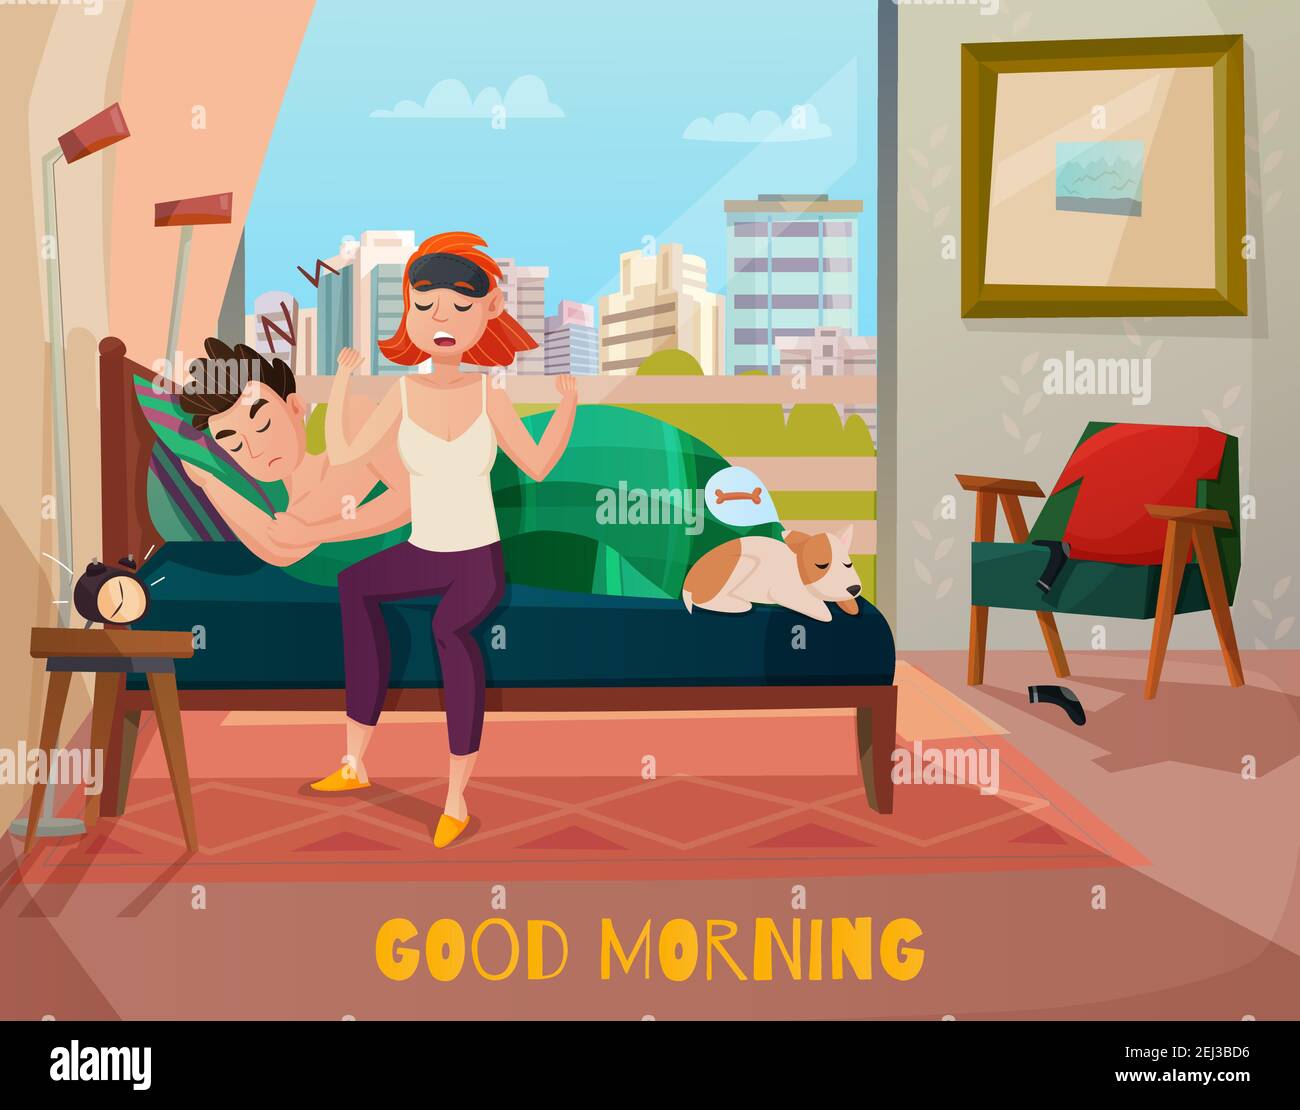 Morning waking of couple scene with sleeping man, yawning woman in pyjamas on window background vector illustration Stock Vector